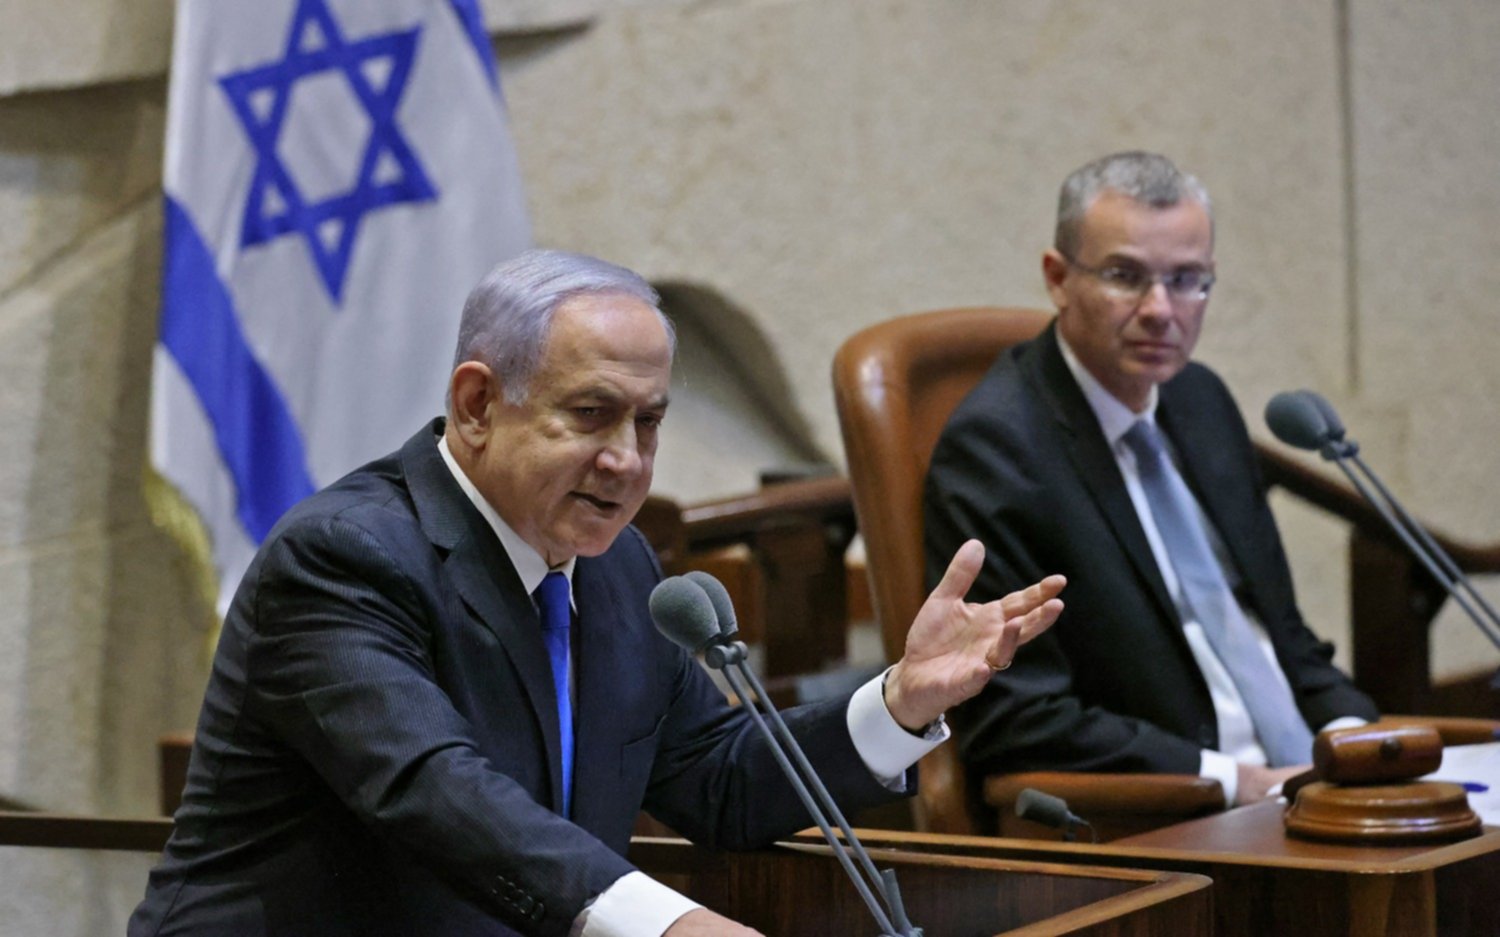 Bennett asumió como primer ministro y puso fin a la era de Netanyahu en Israel